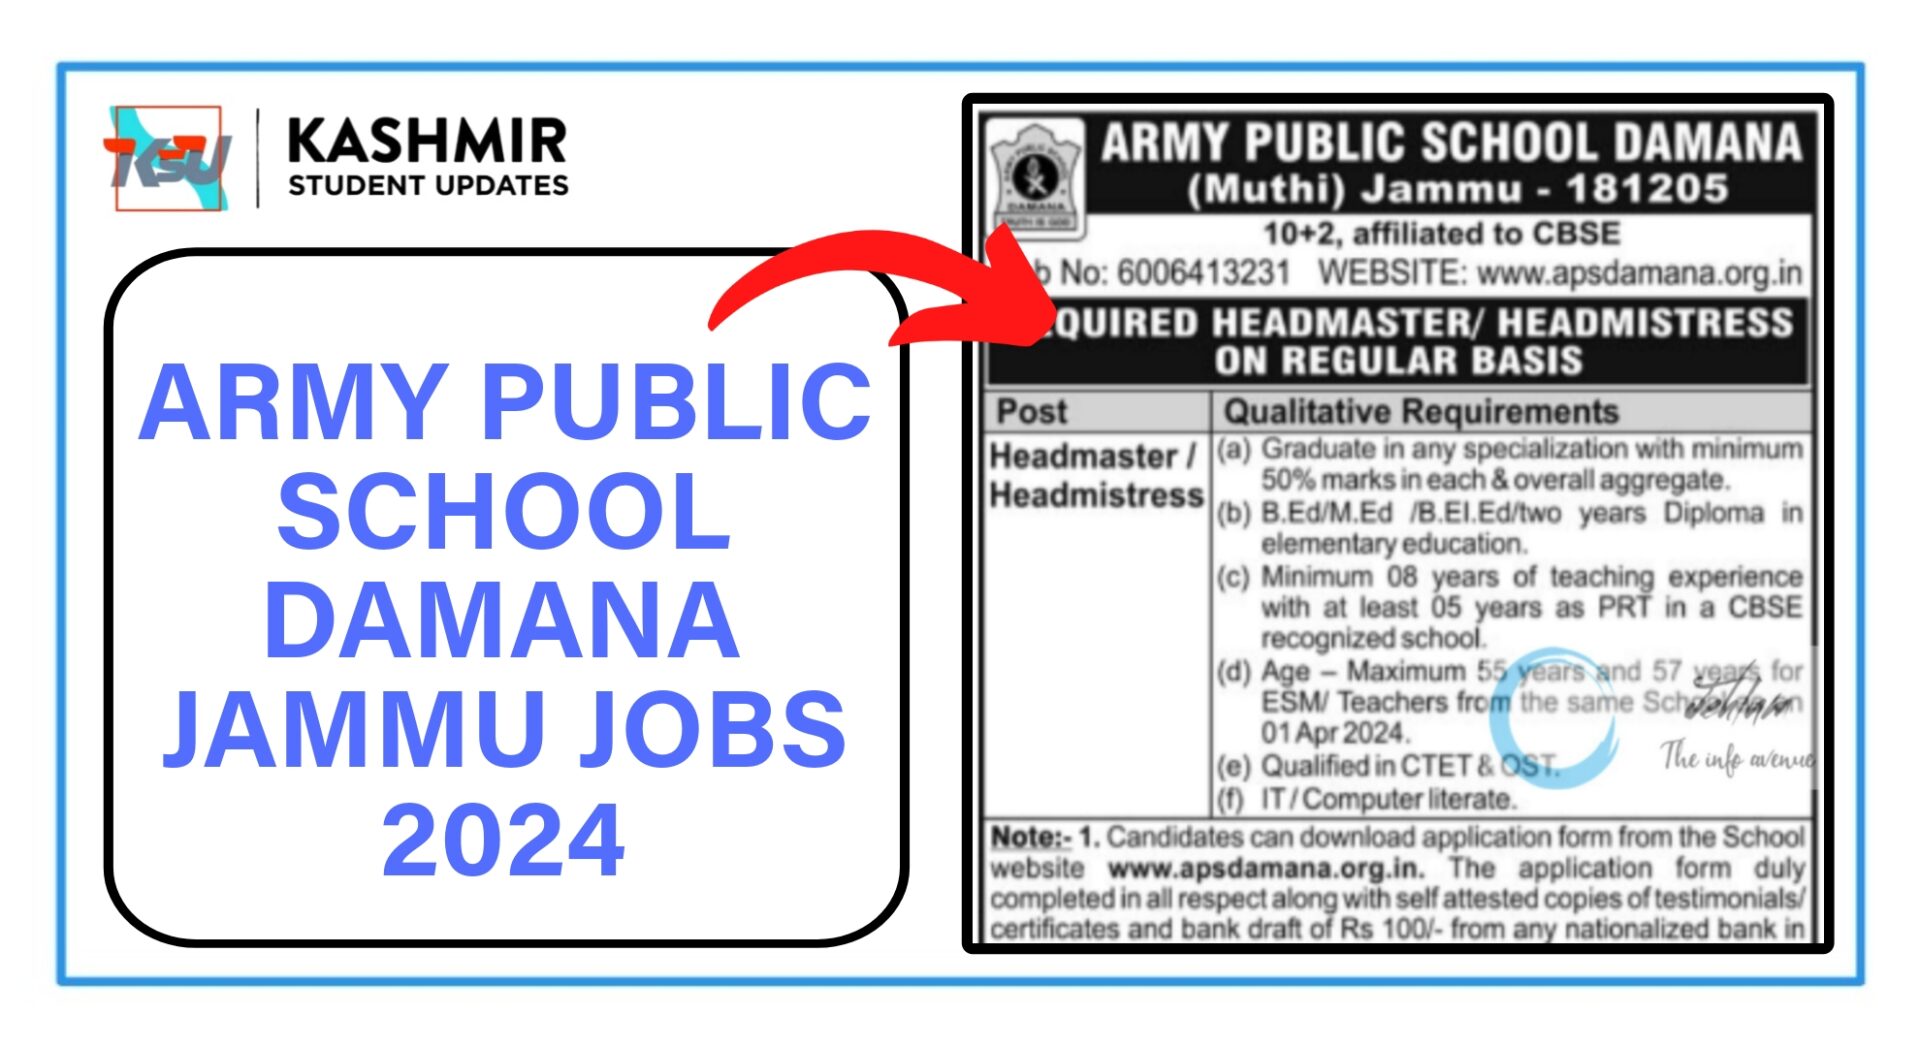 army public school damana jammu jobs 2024